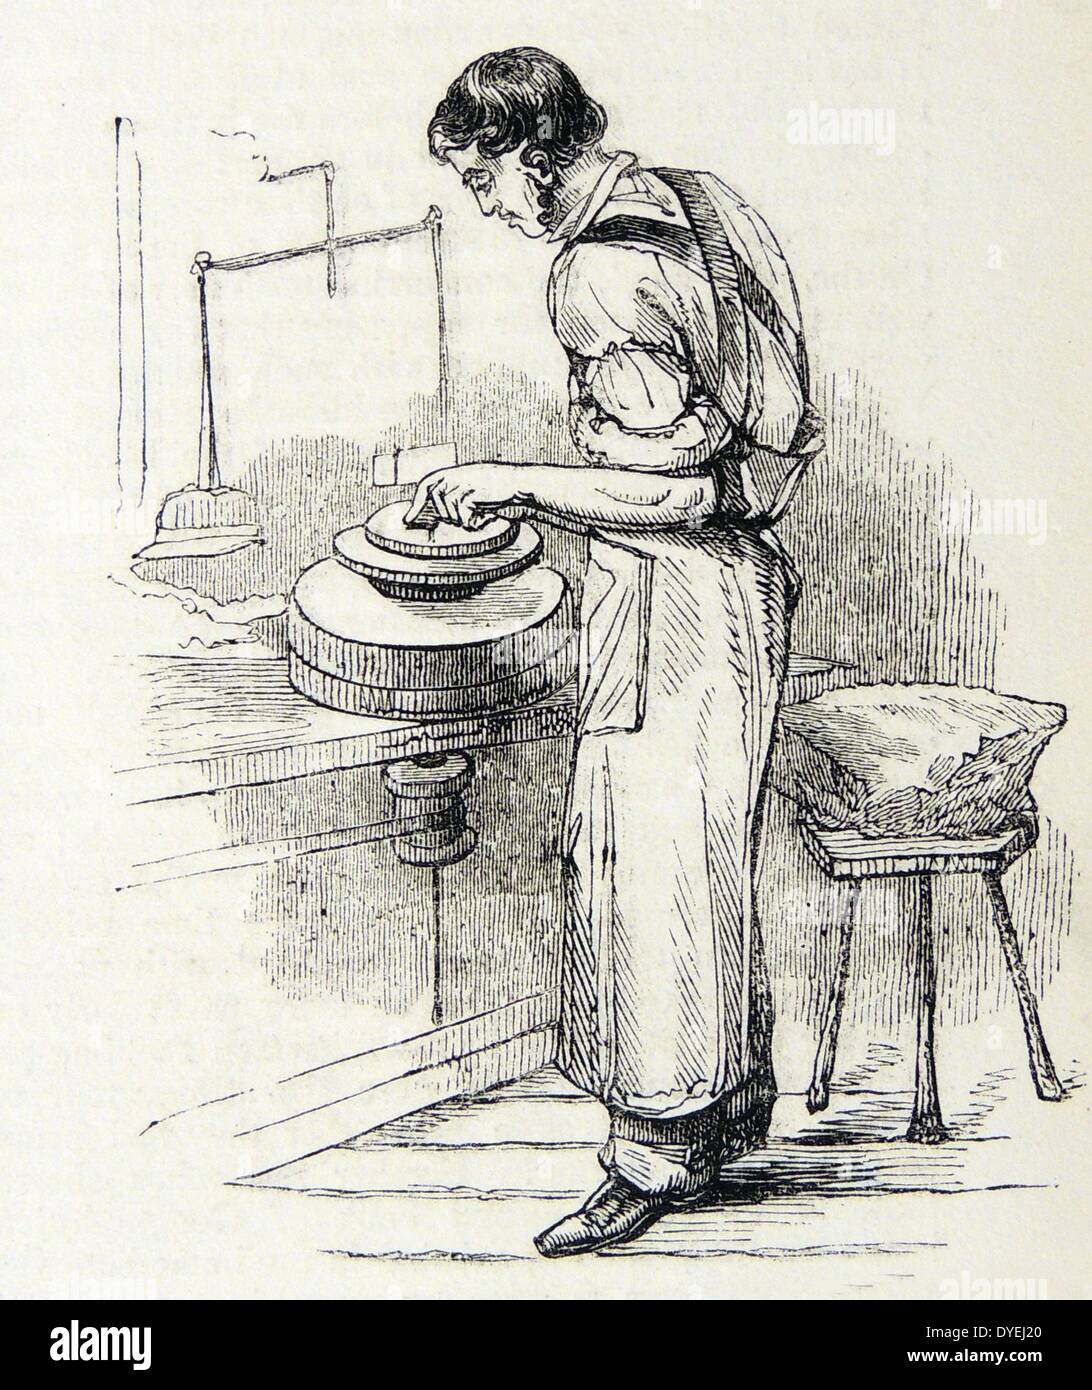 Flache Teller, The Potteries, Staffordshire, England zu machen. Gravur, London, c1851. Stockfoto